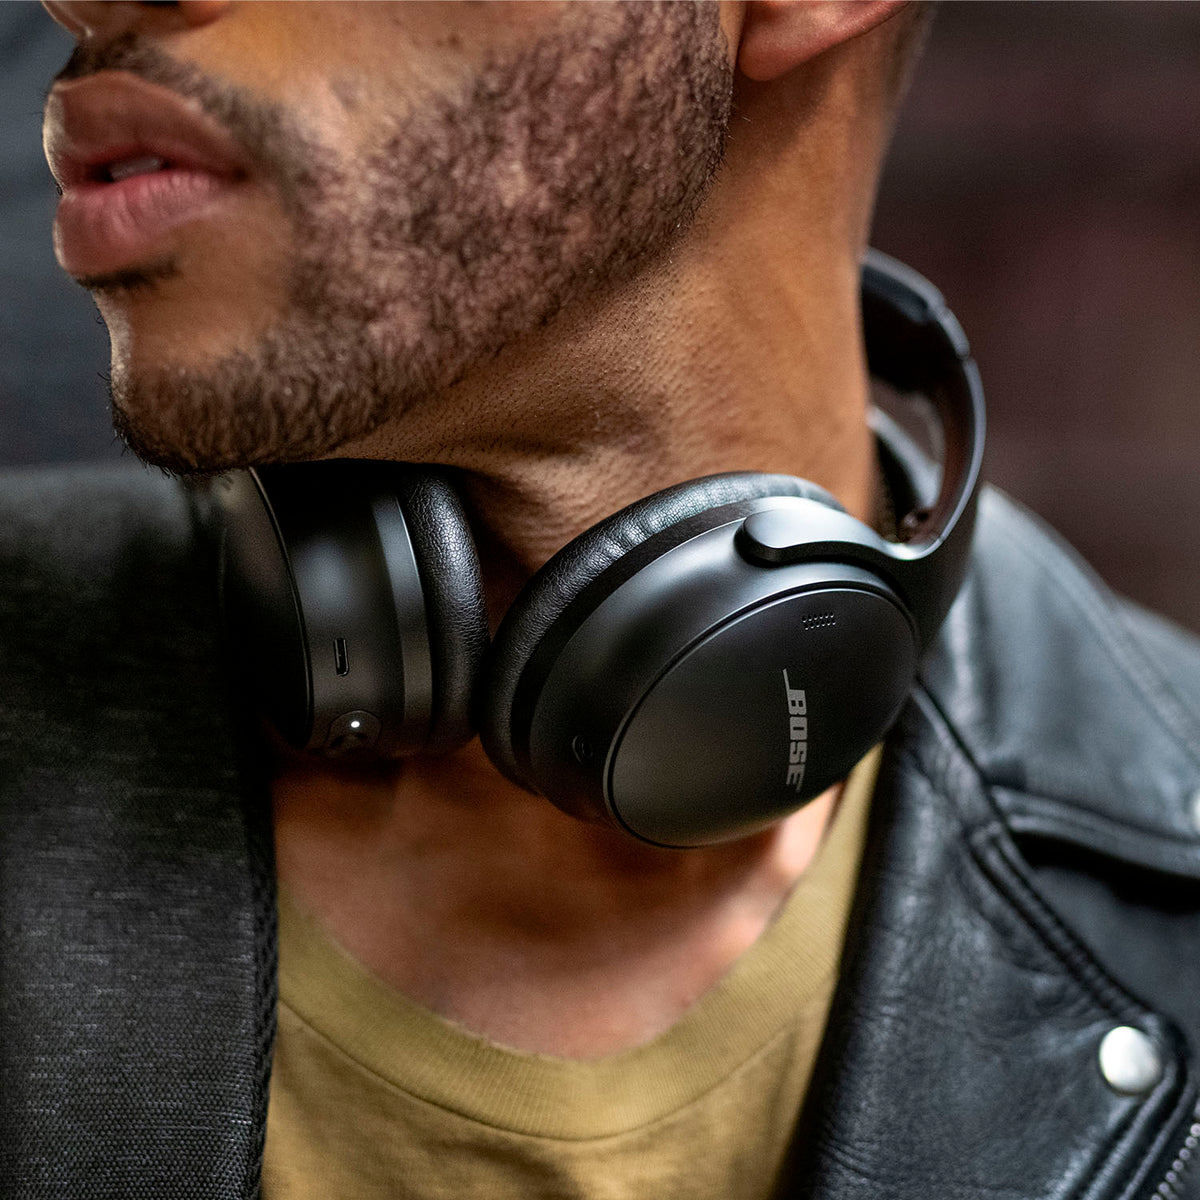 Bose Quietcomfort 45 Headphones Black